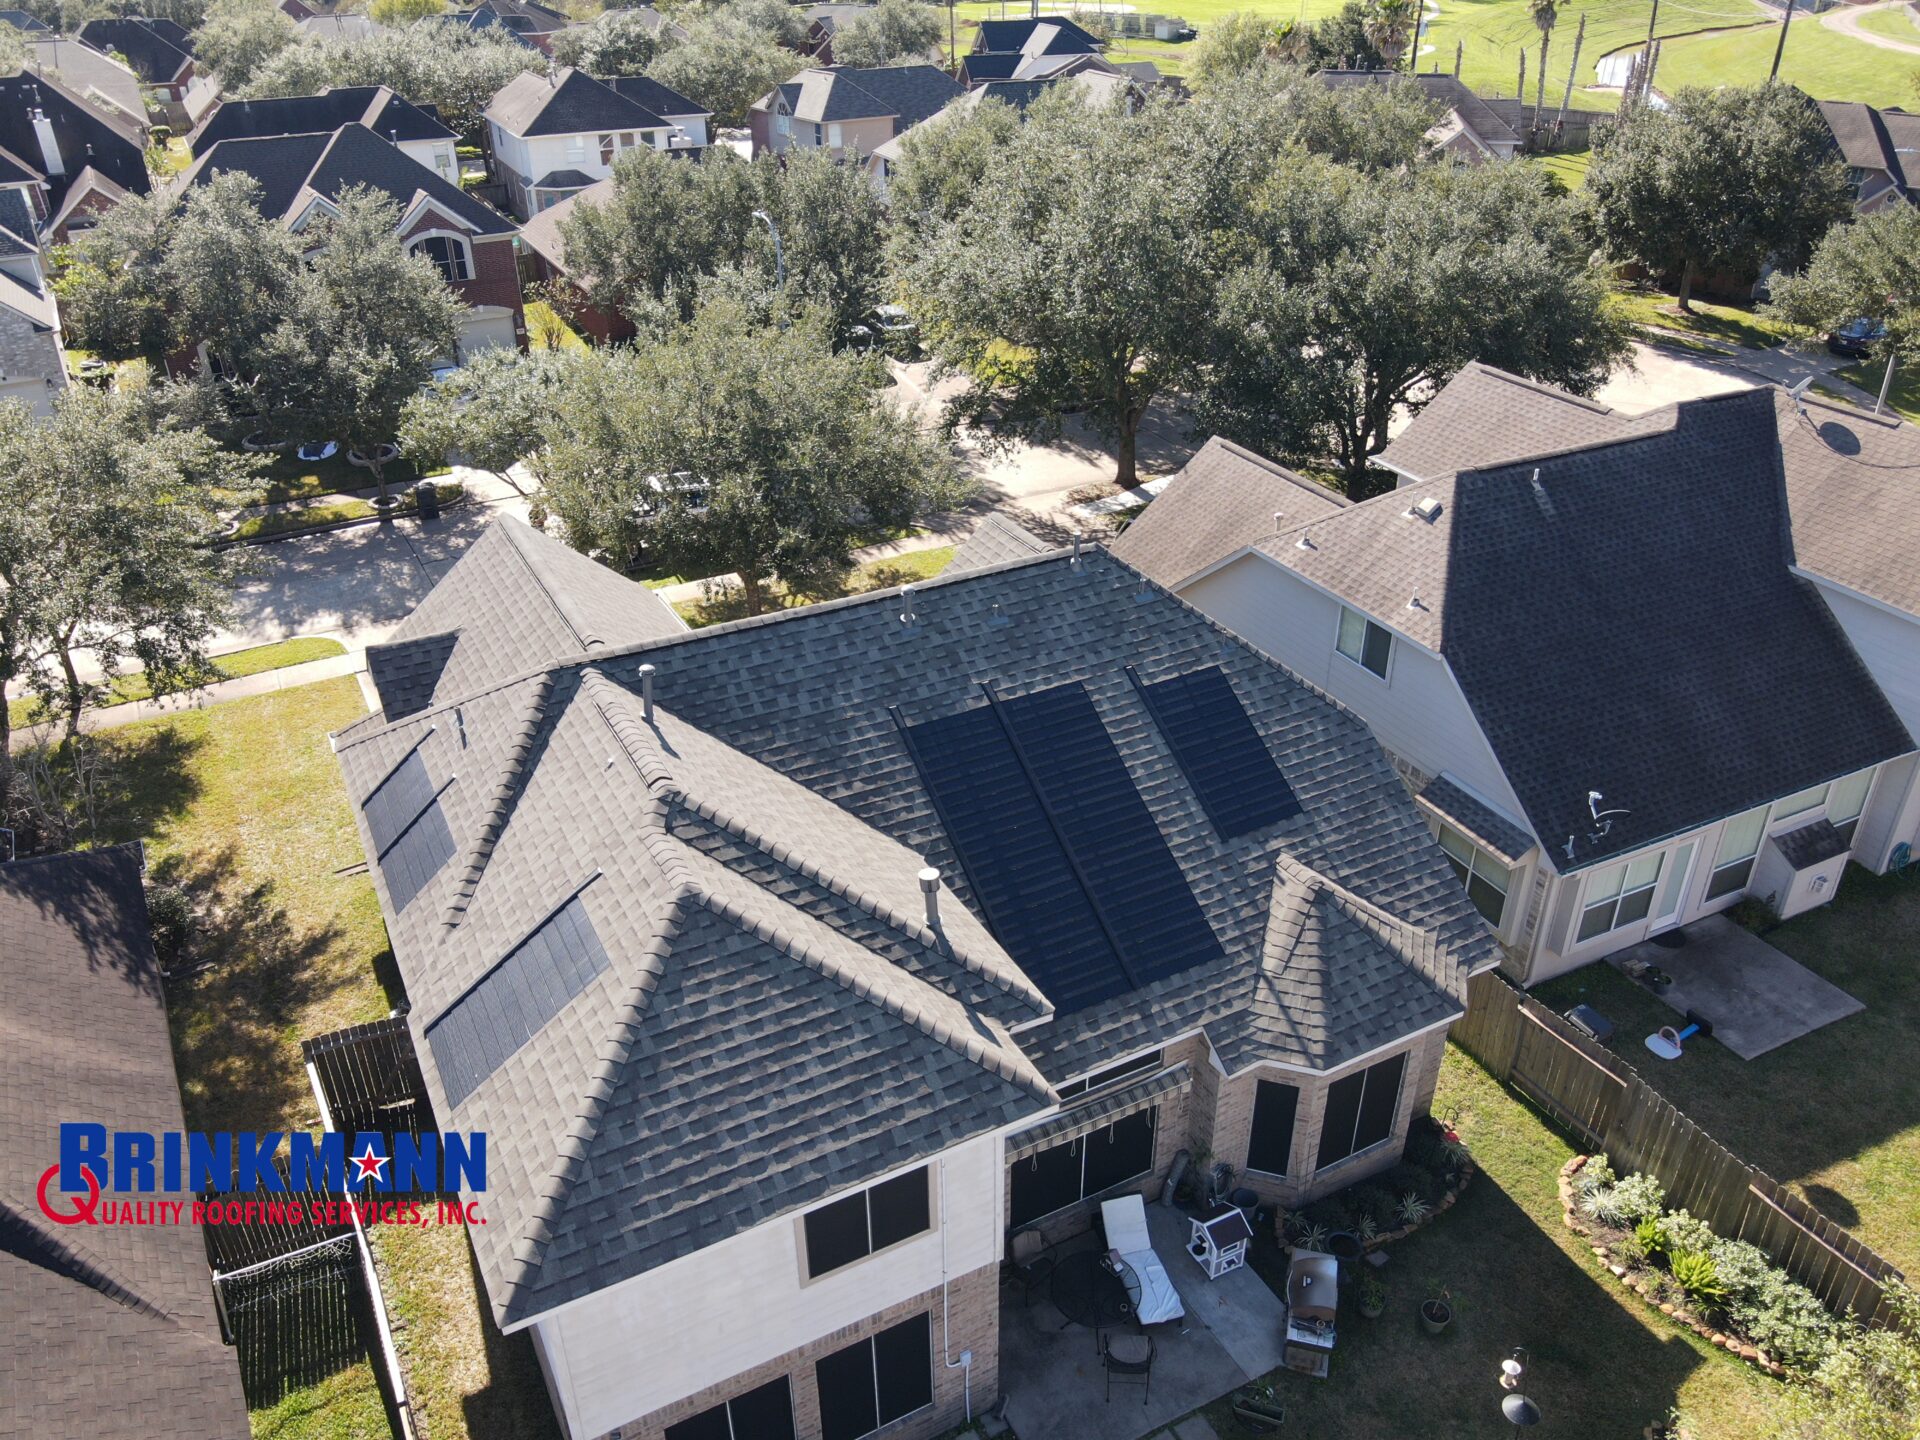 Timberline Solar Shingles in Sugarland Texas. Solar System